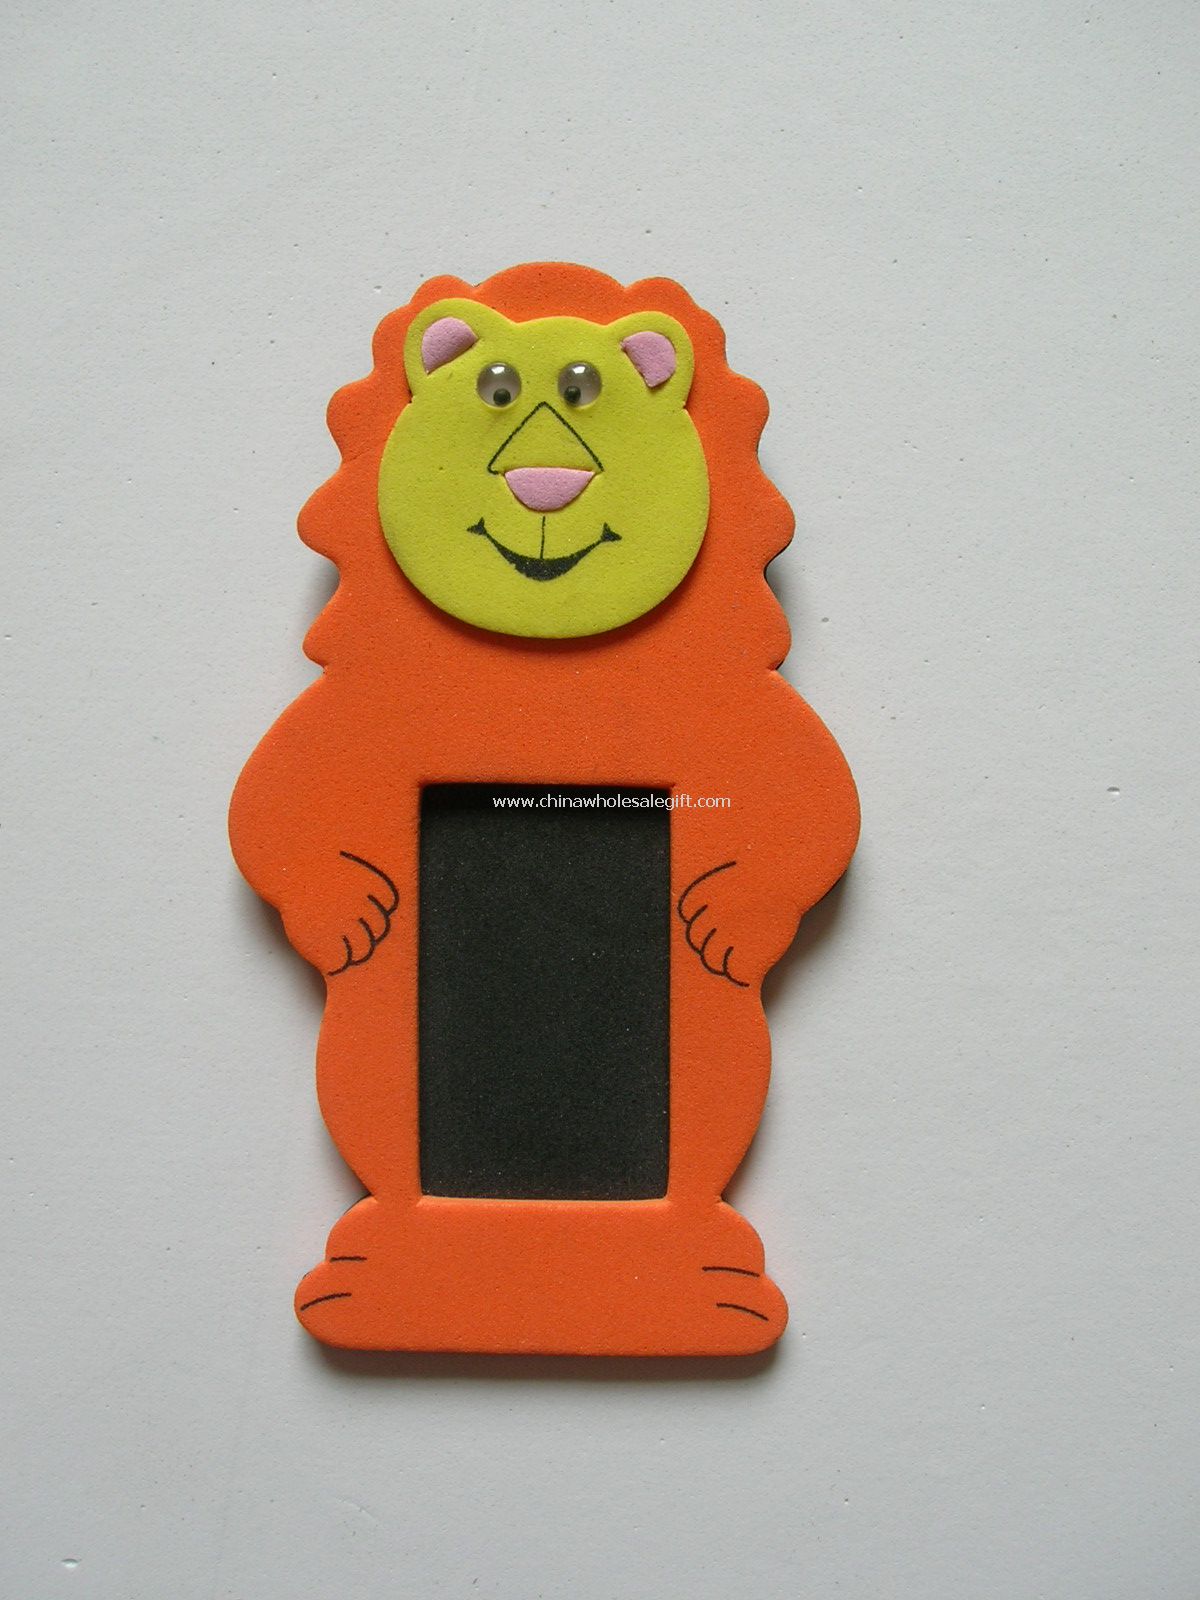 Lion fridge magnet with photo frame